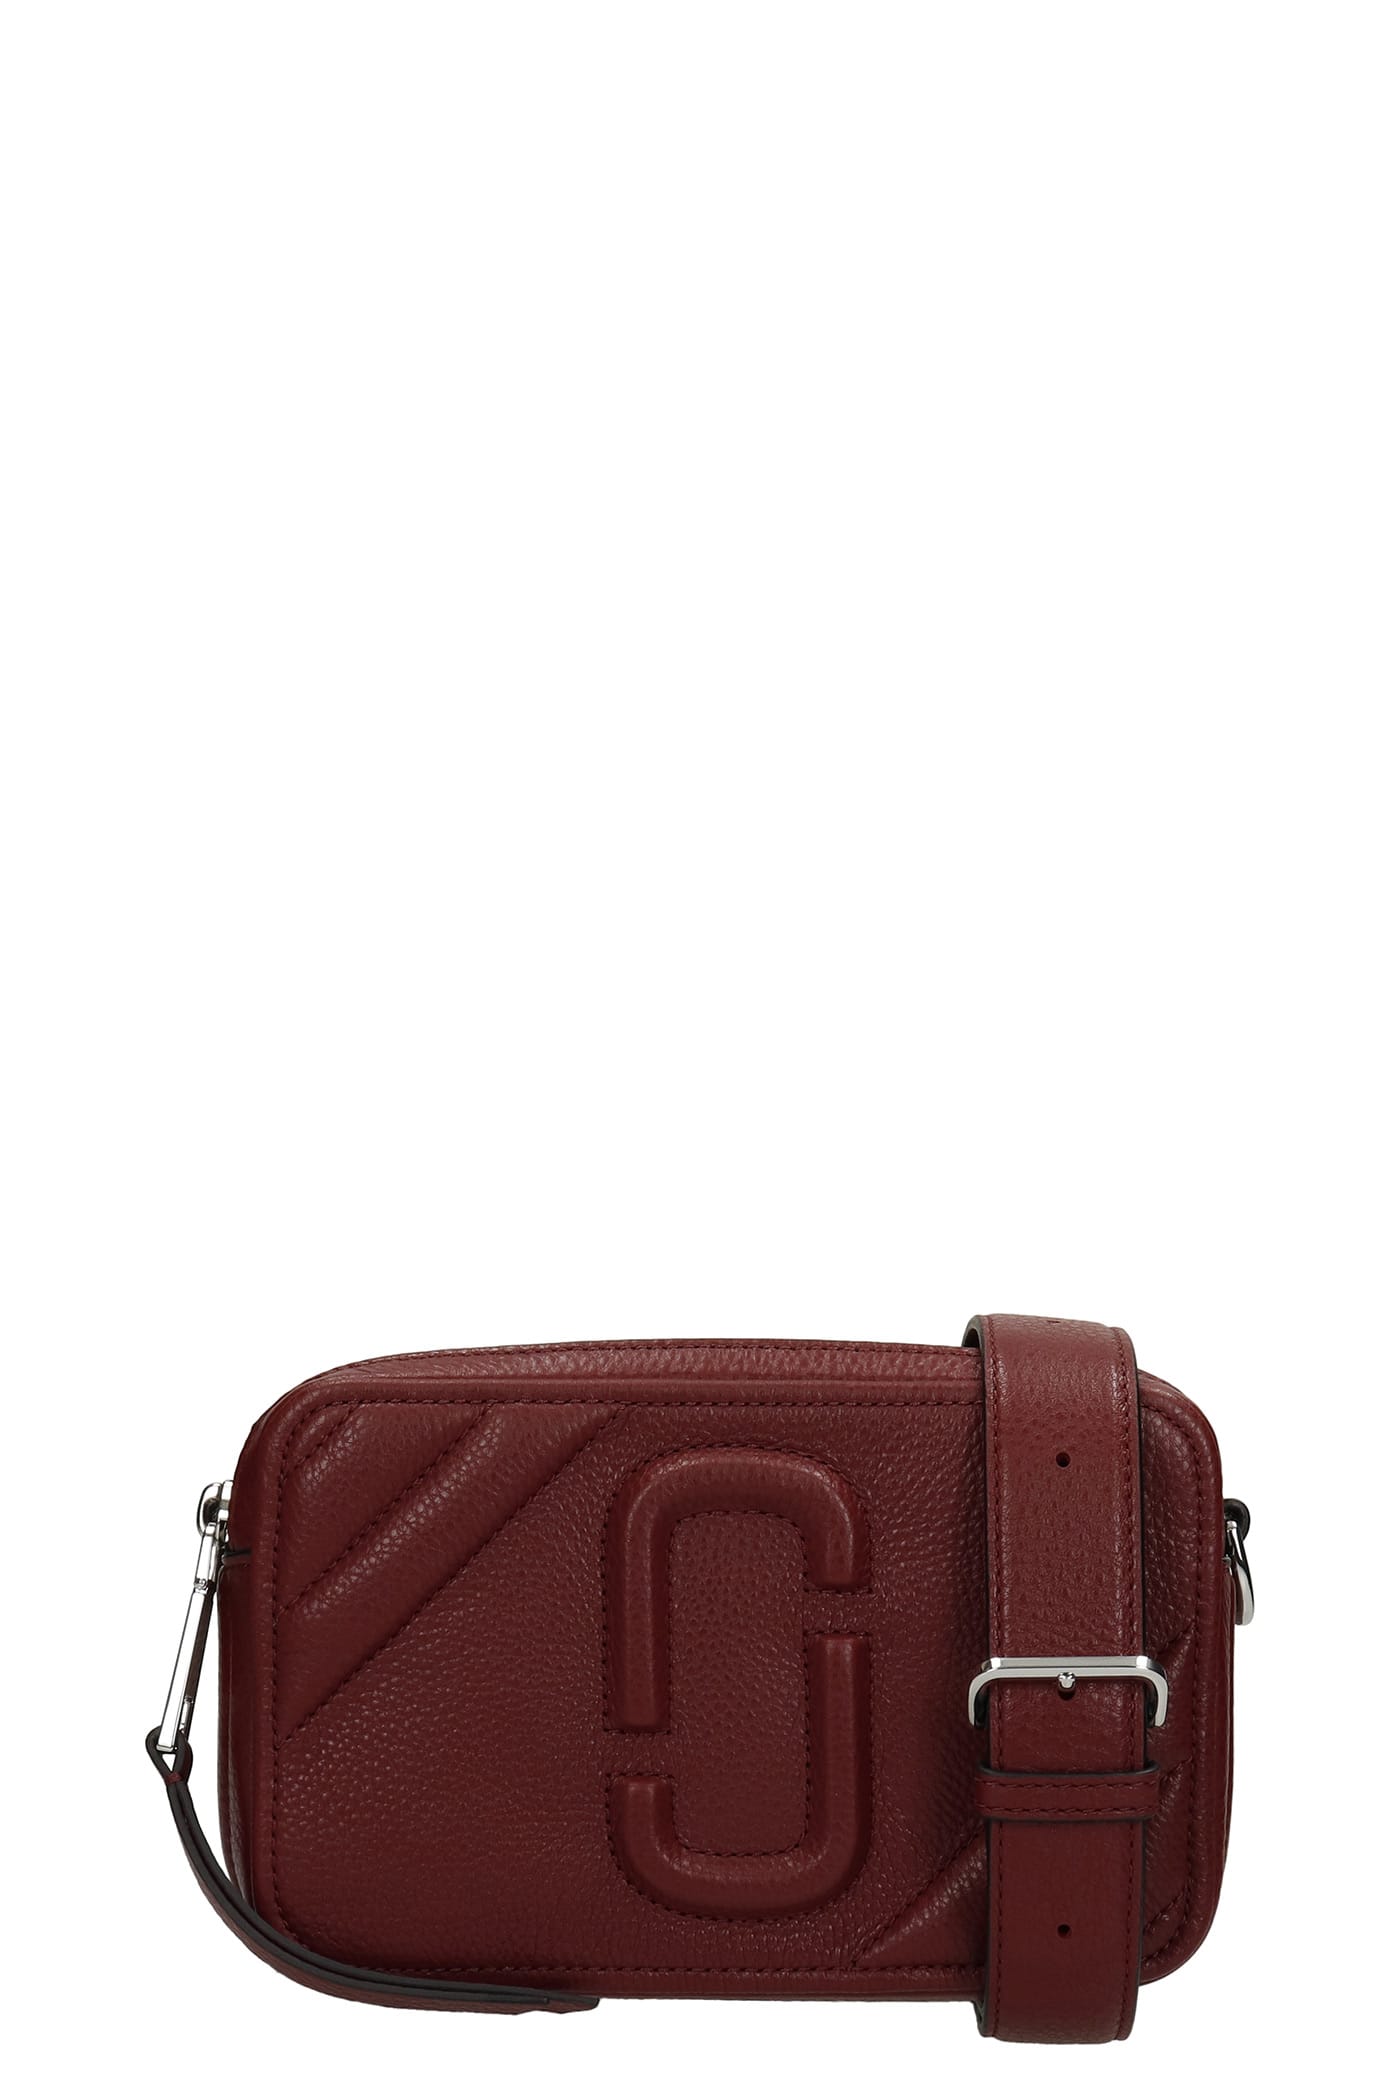 Marc Jacobs The Moto Shot21 Shoulder Bag In Red Leather